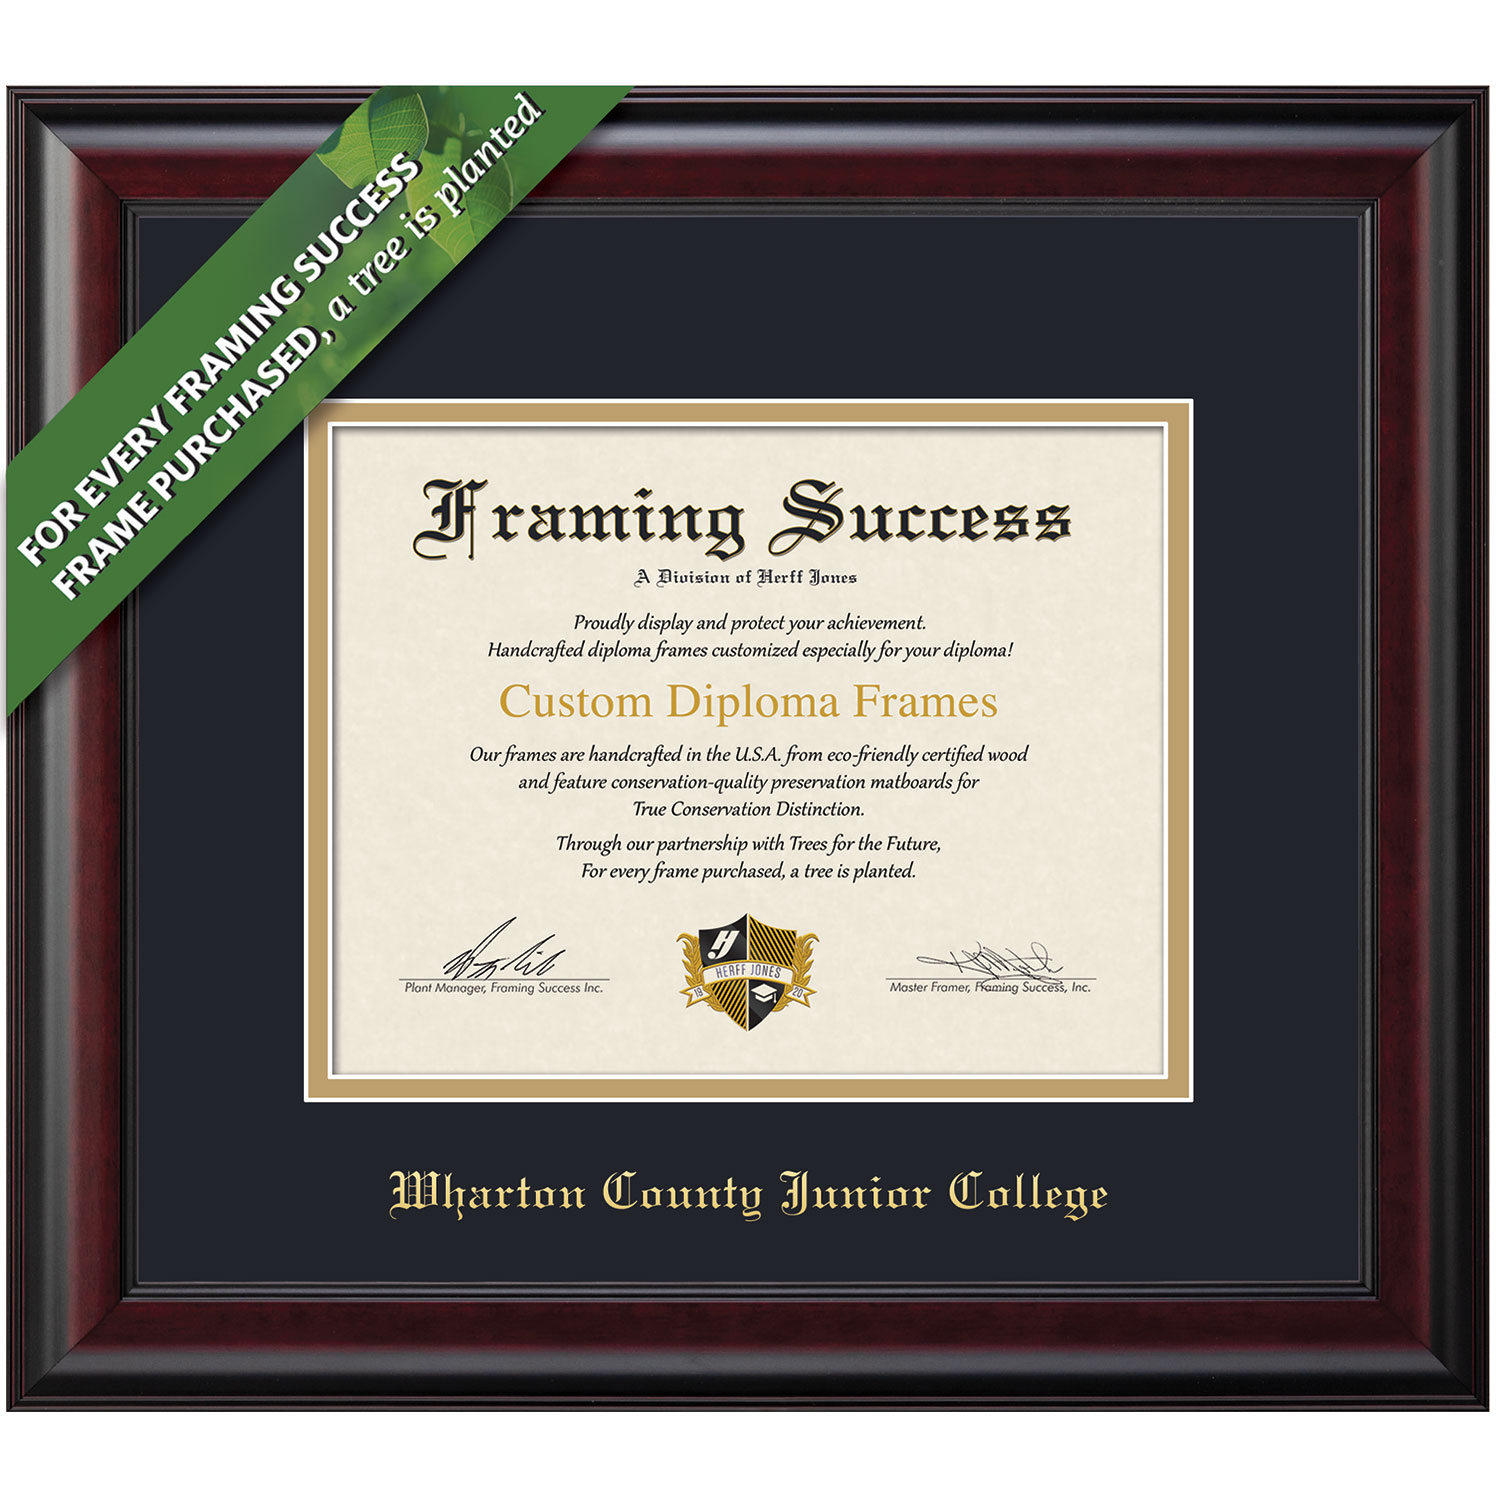 Framing Success 8.5 x 11 Classic Gold Embossed School Name Associates Diploma Frame